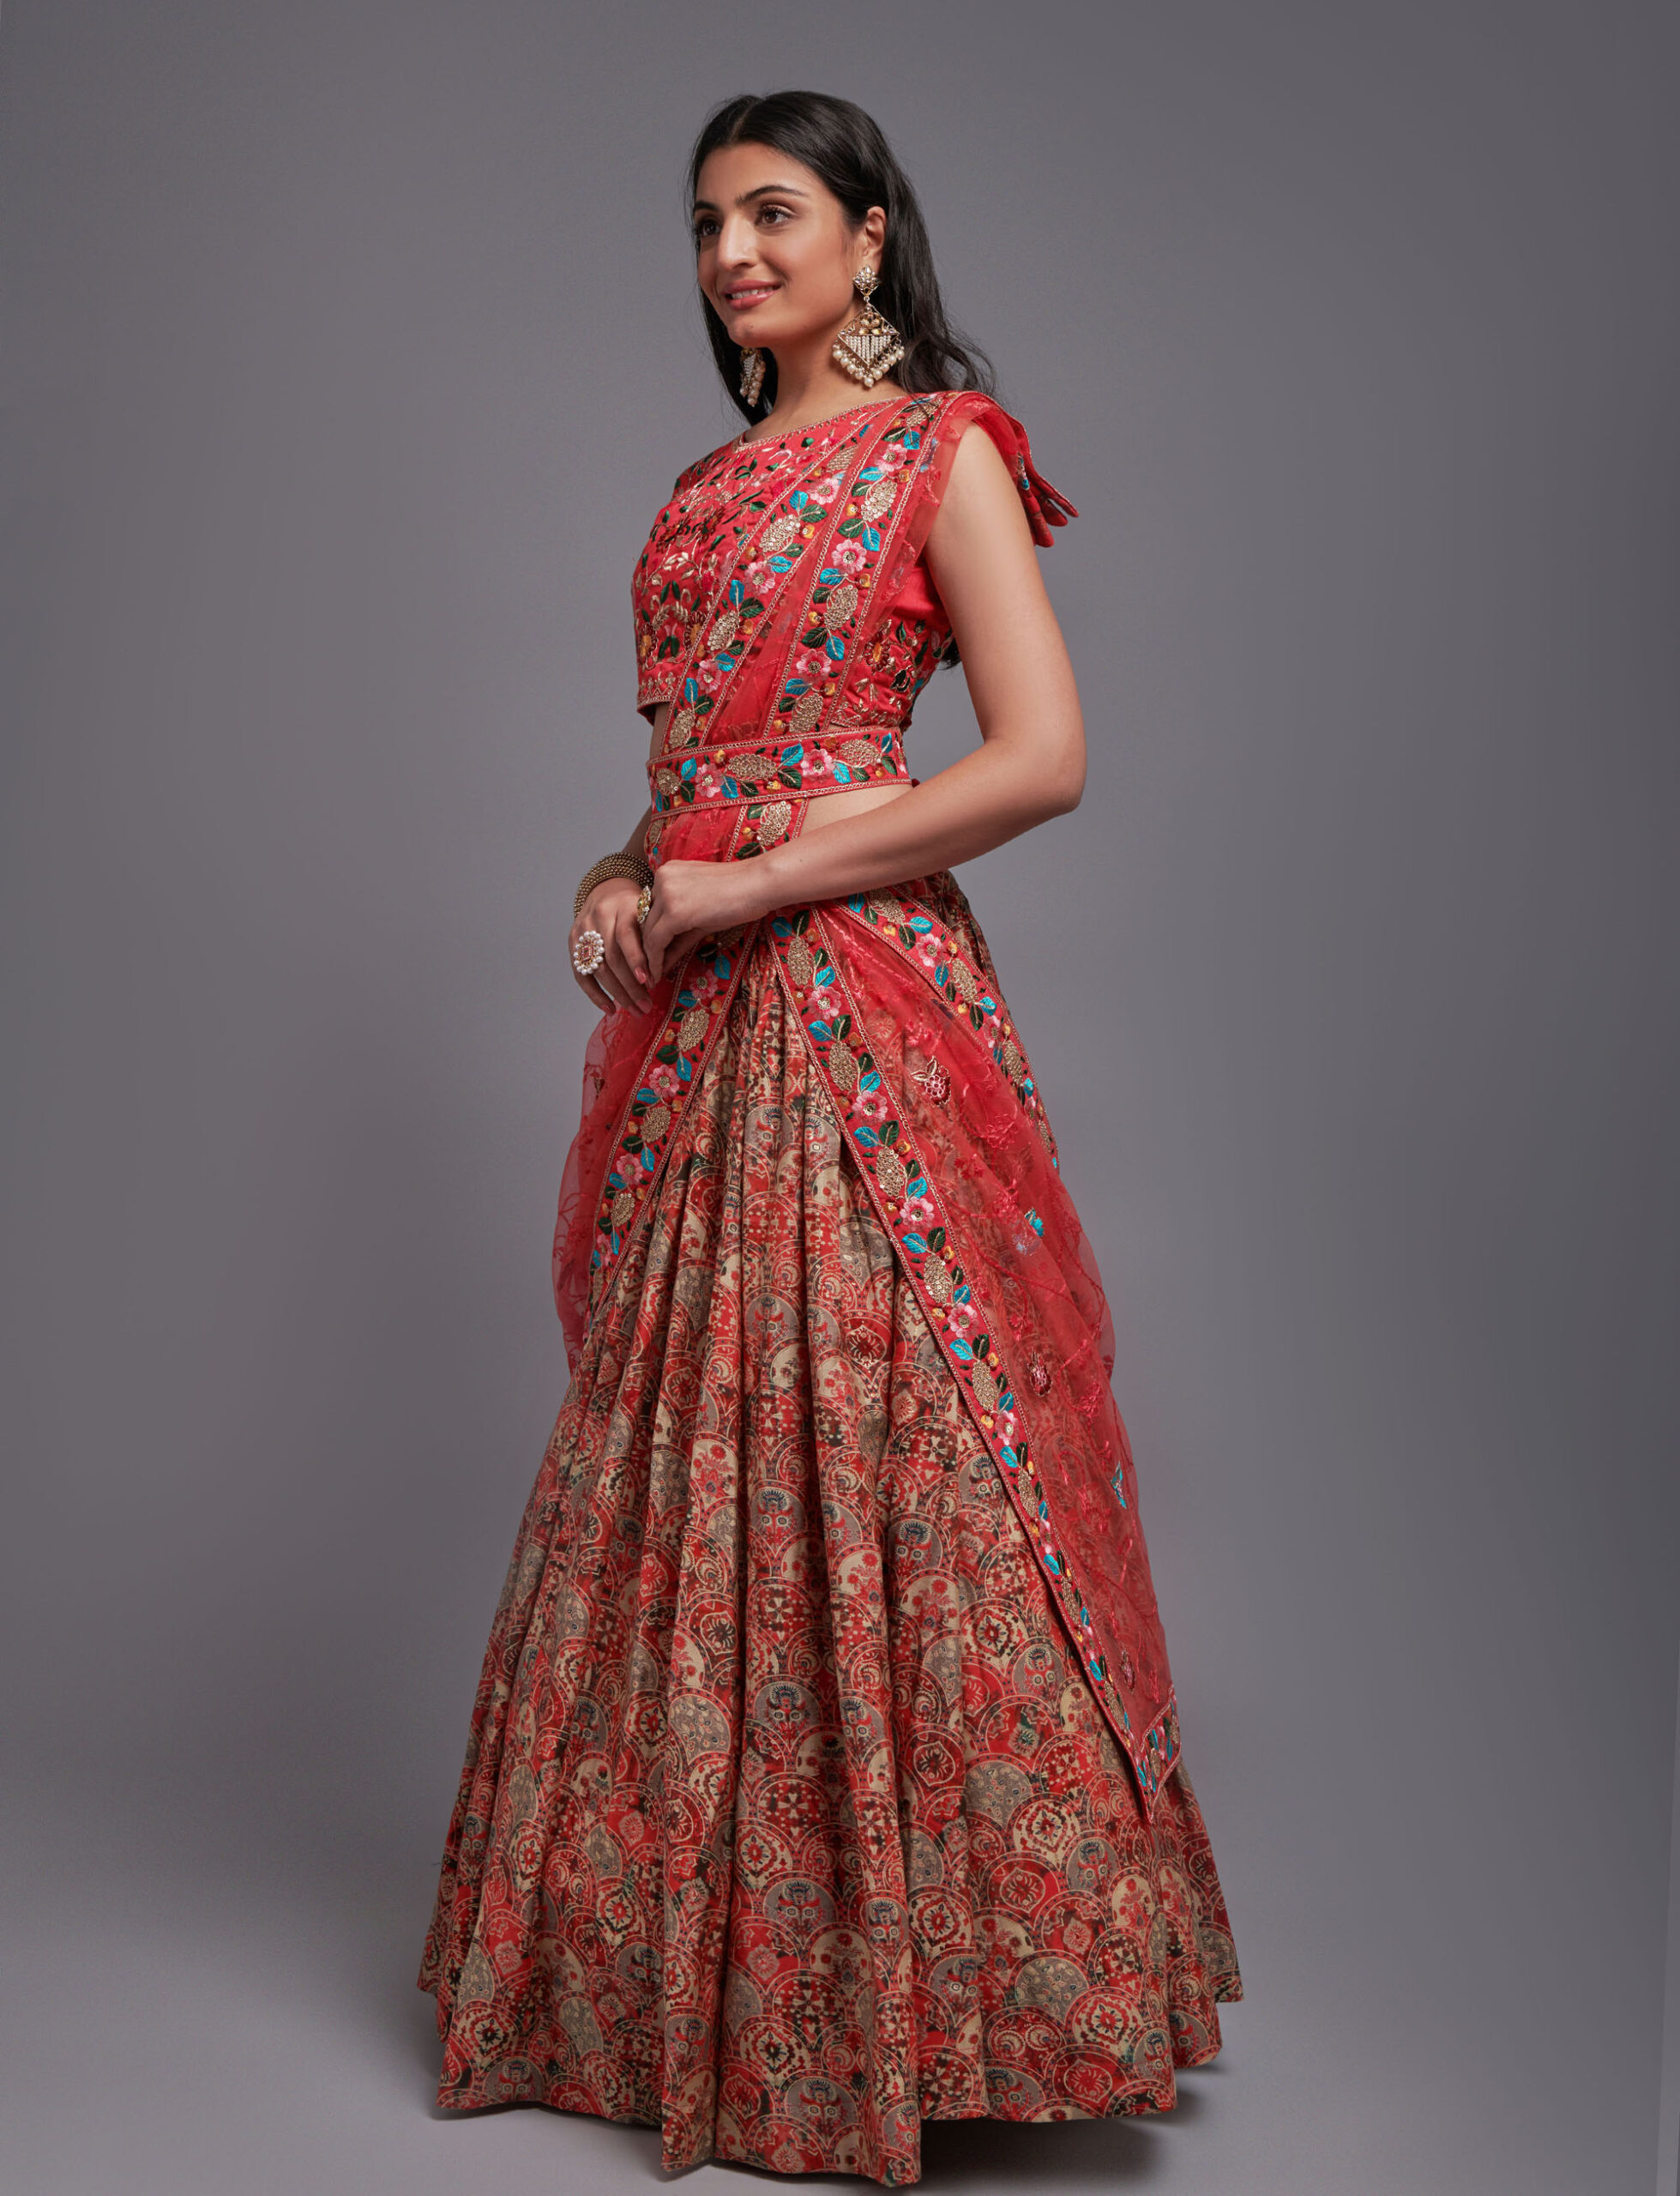 Bollywood Indian New Lehenga Choli Ethnic Wedding Bridal Party Wear Dress  Lengha | eBay